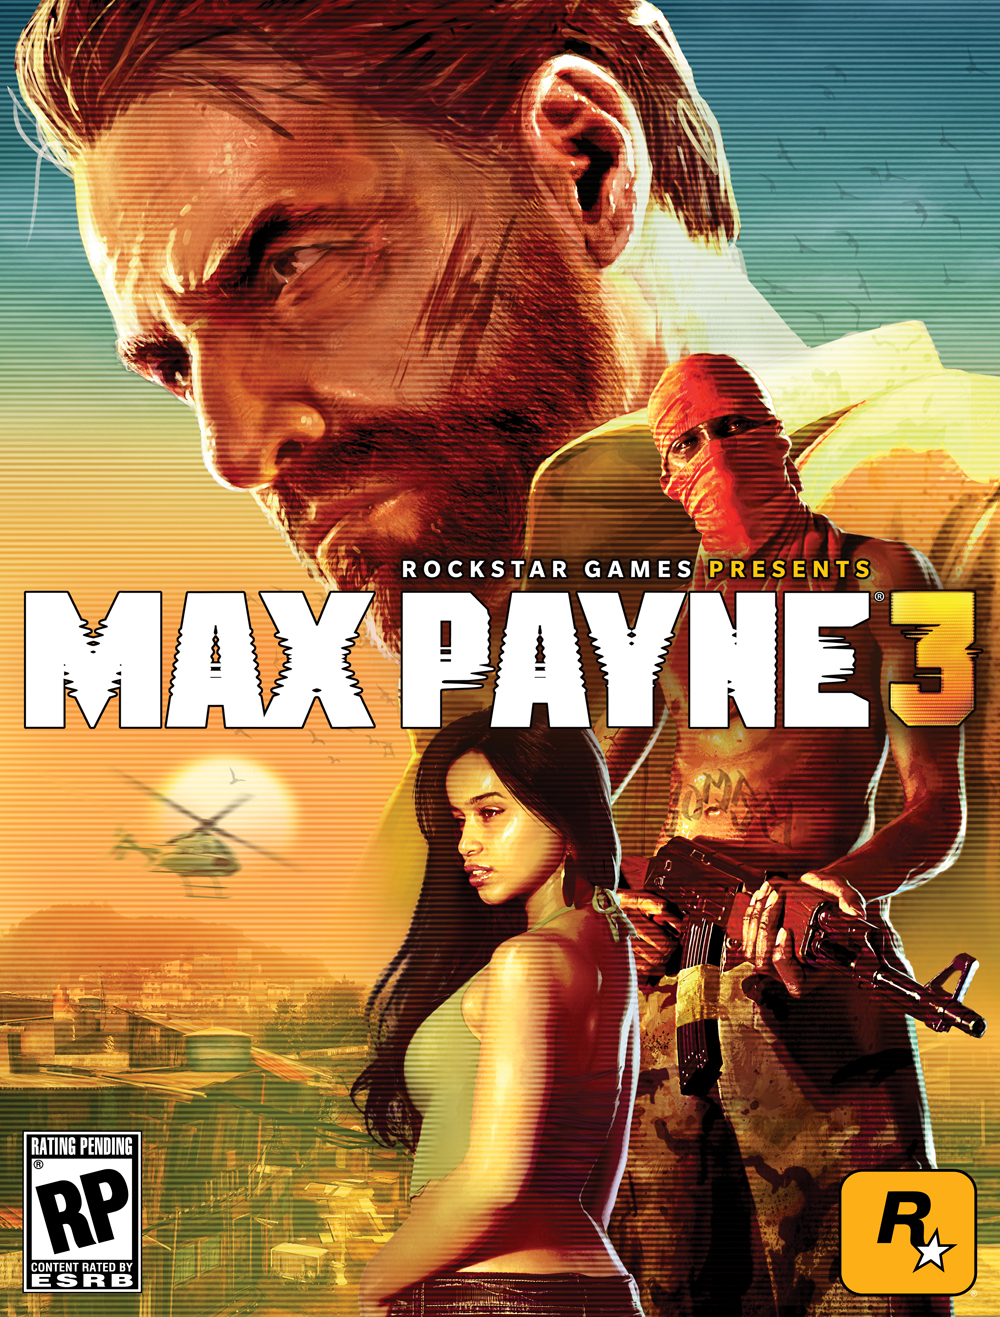 Ed, Max Payne Wiki